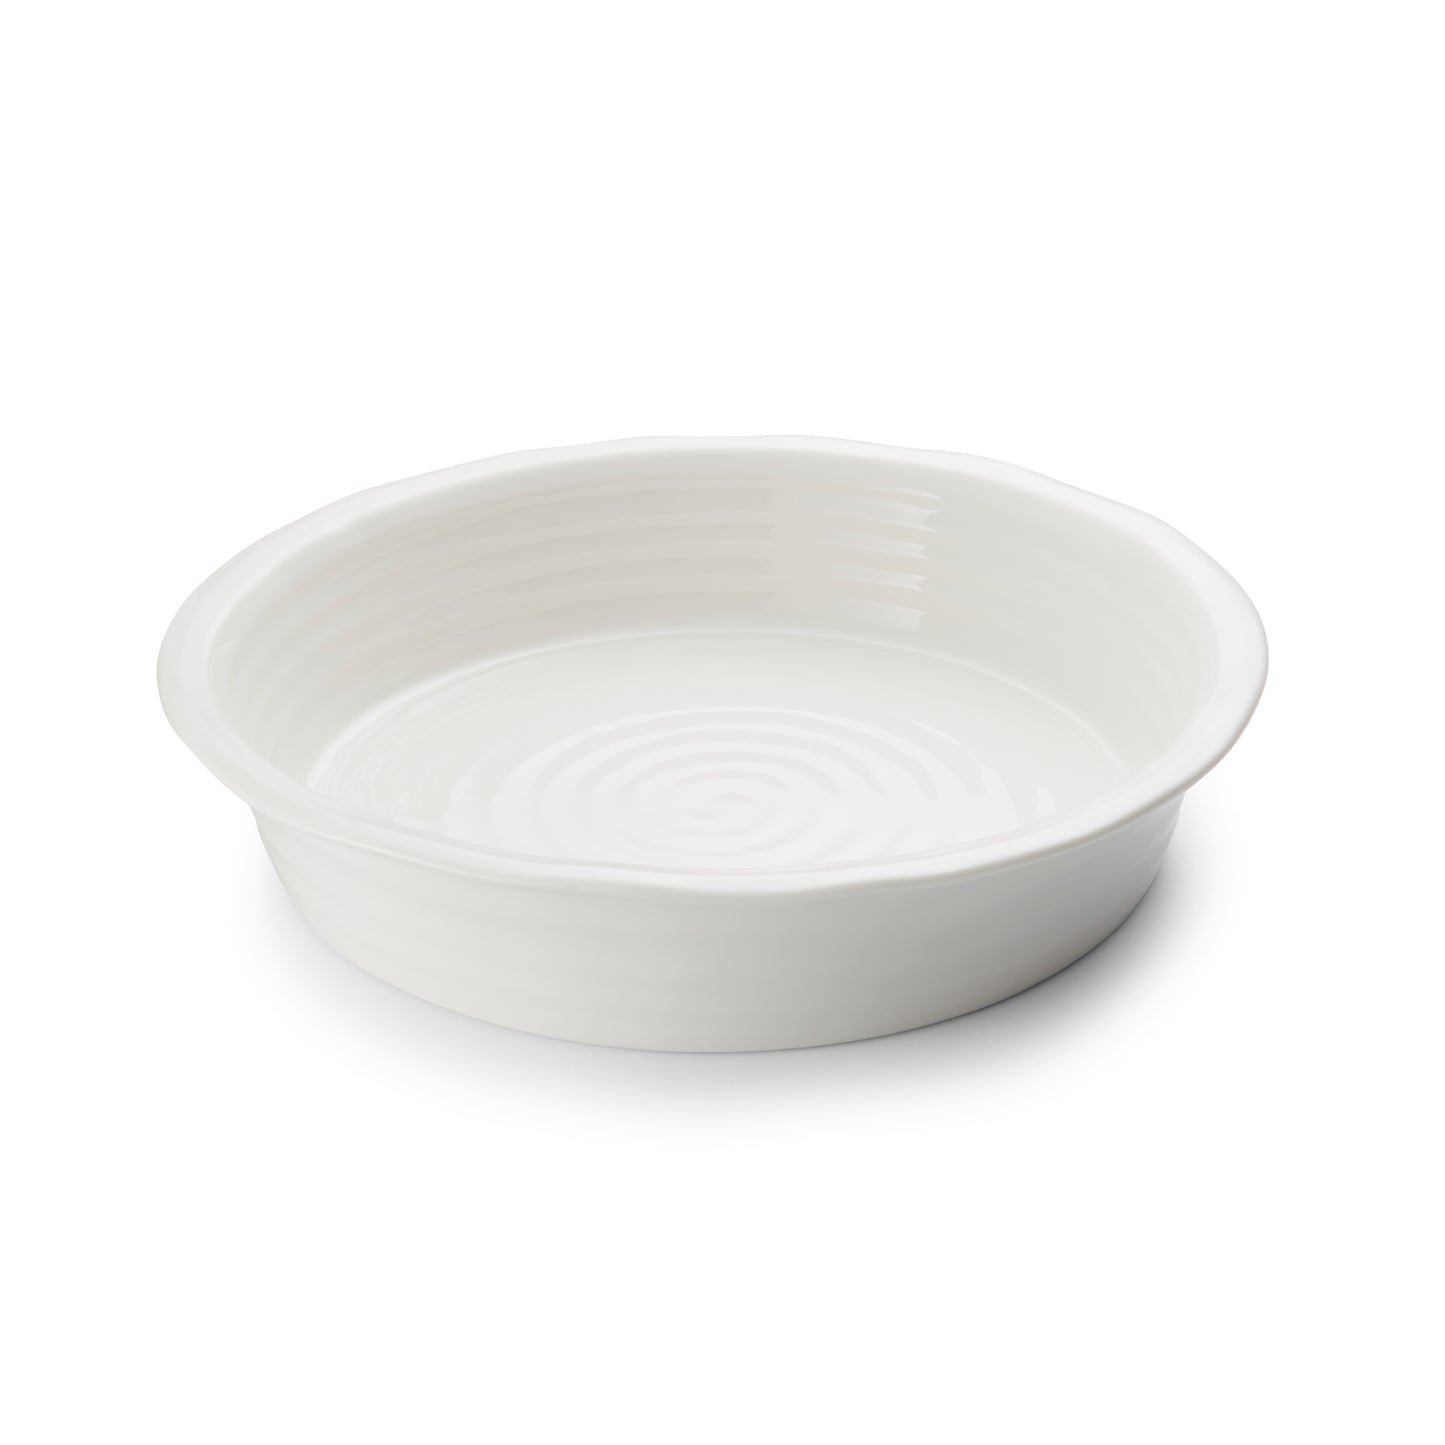 Sophie Conran for Portmeirion White Round Pie Dish 27.5cm